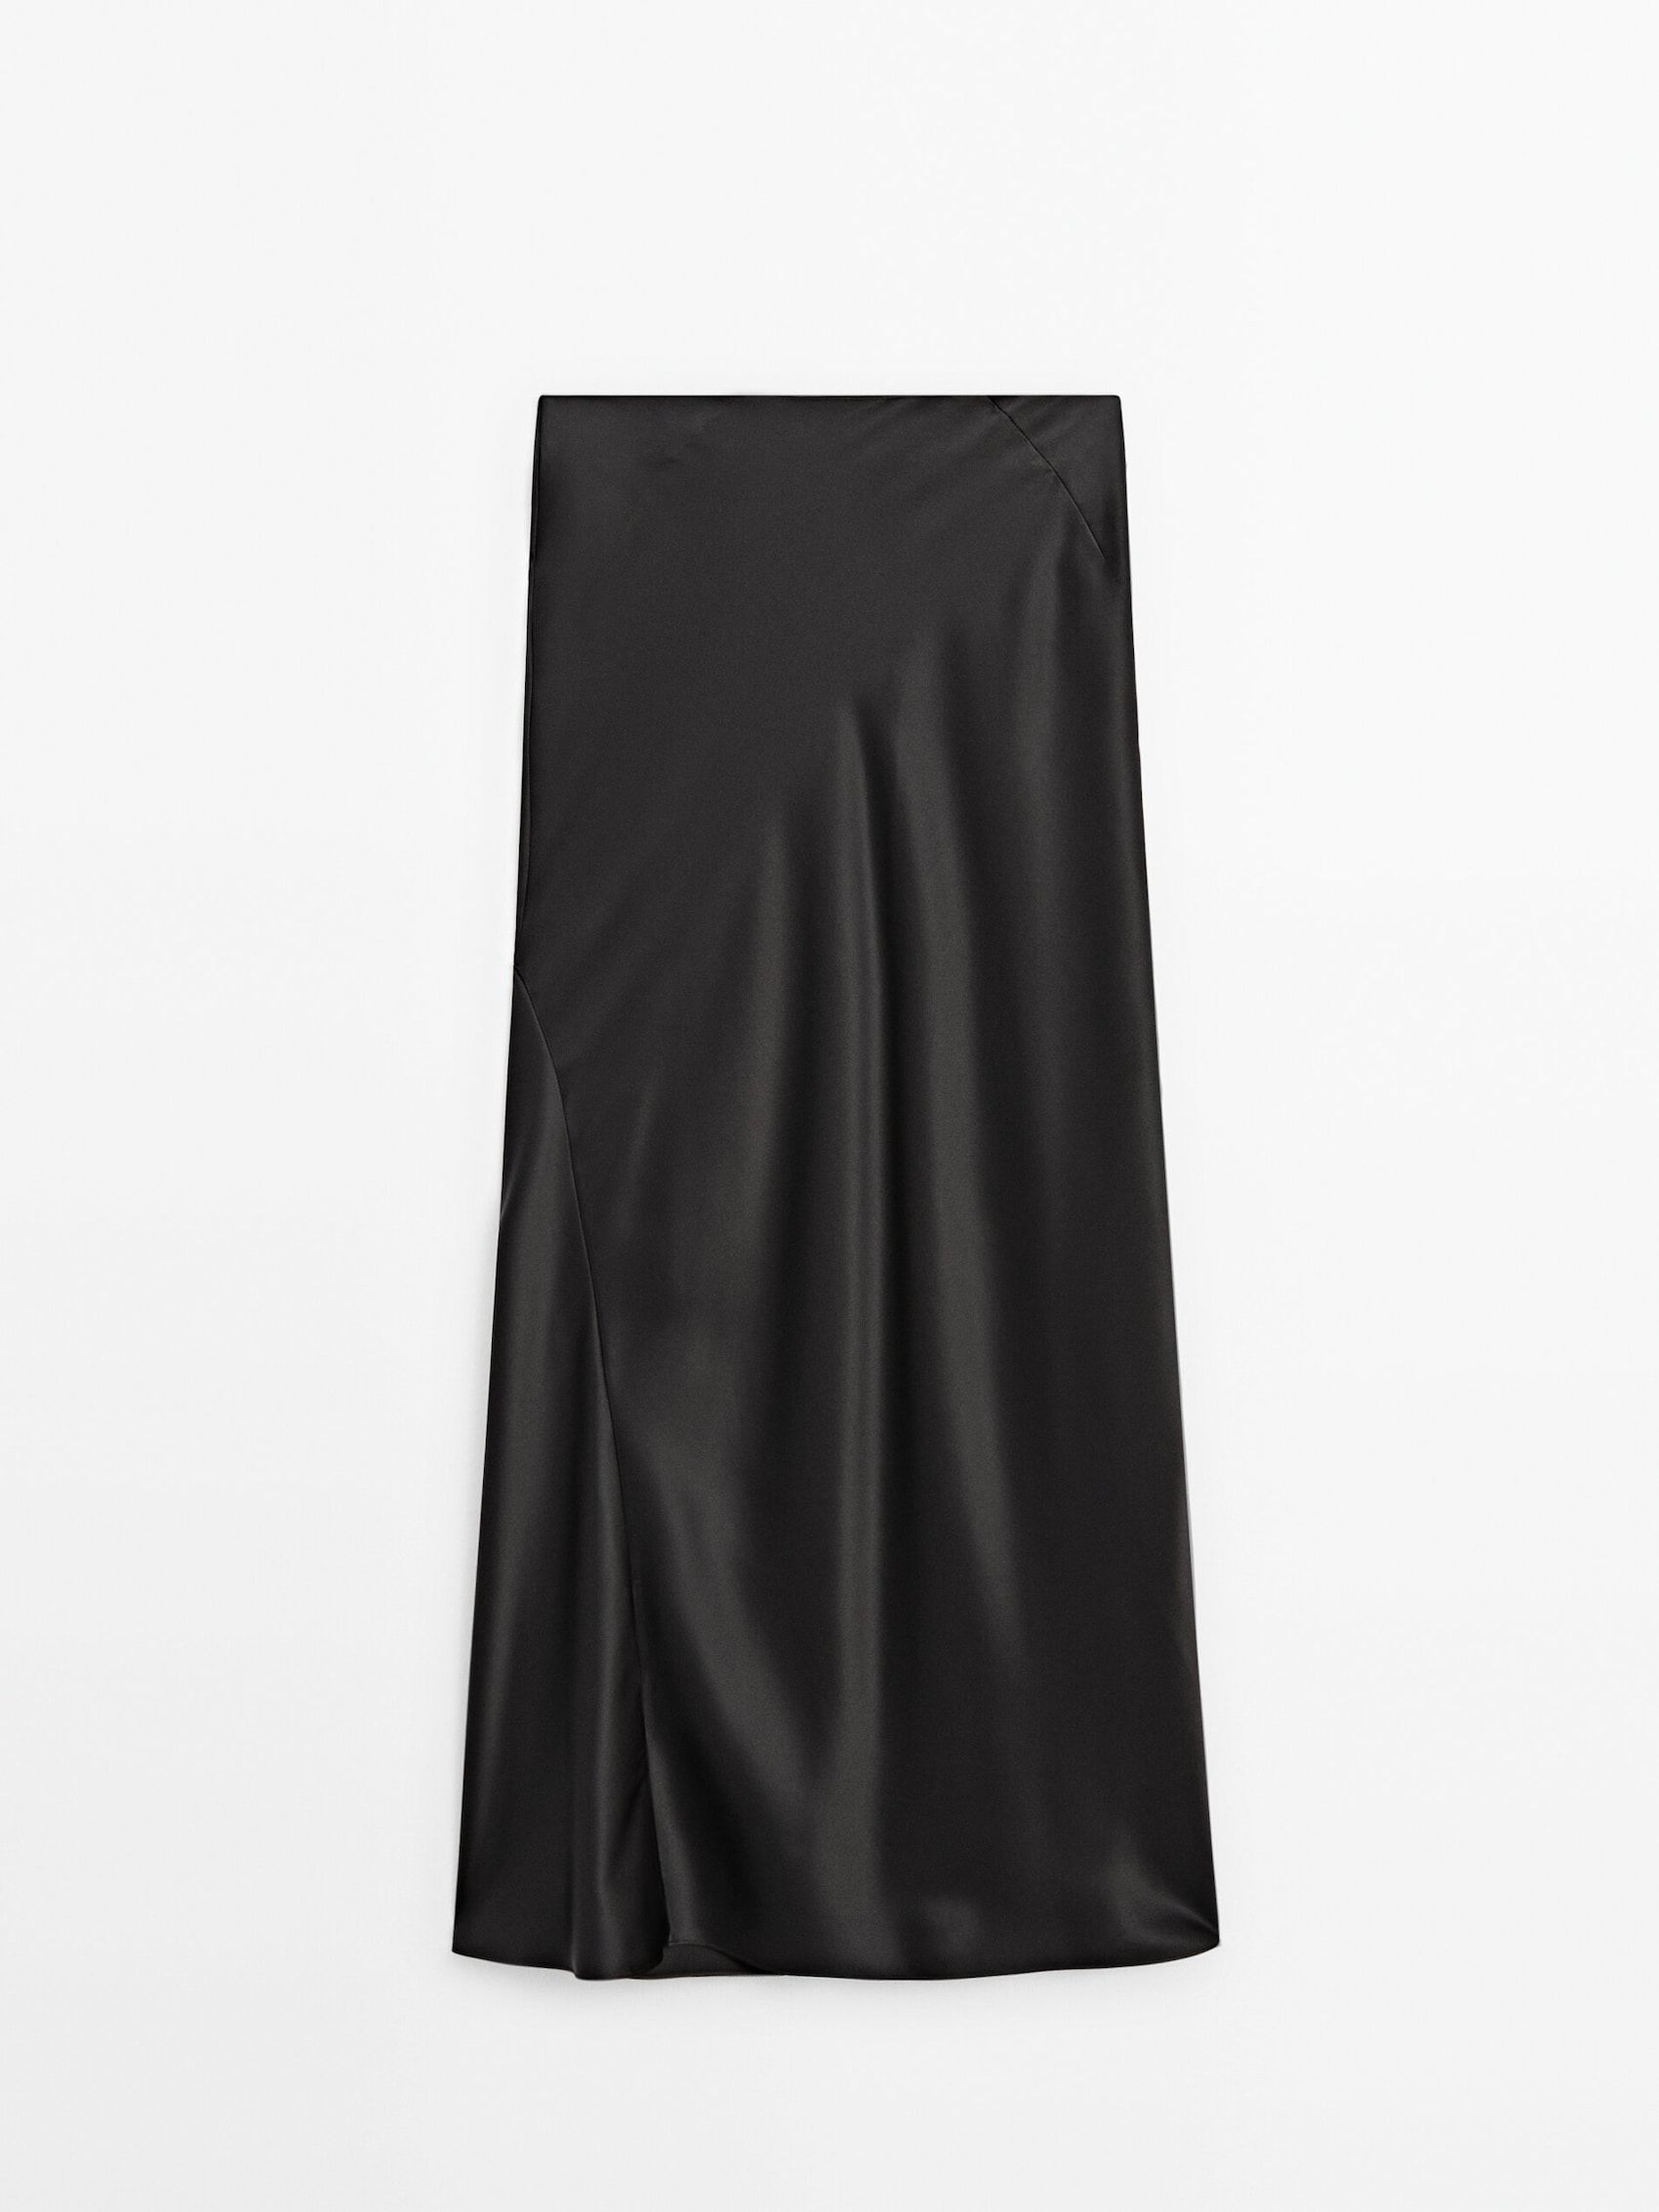 Long satin-finish silk skirt - Studio - Massimo Dutti United Kingdom | Massimo Dutti UK